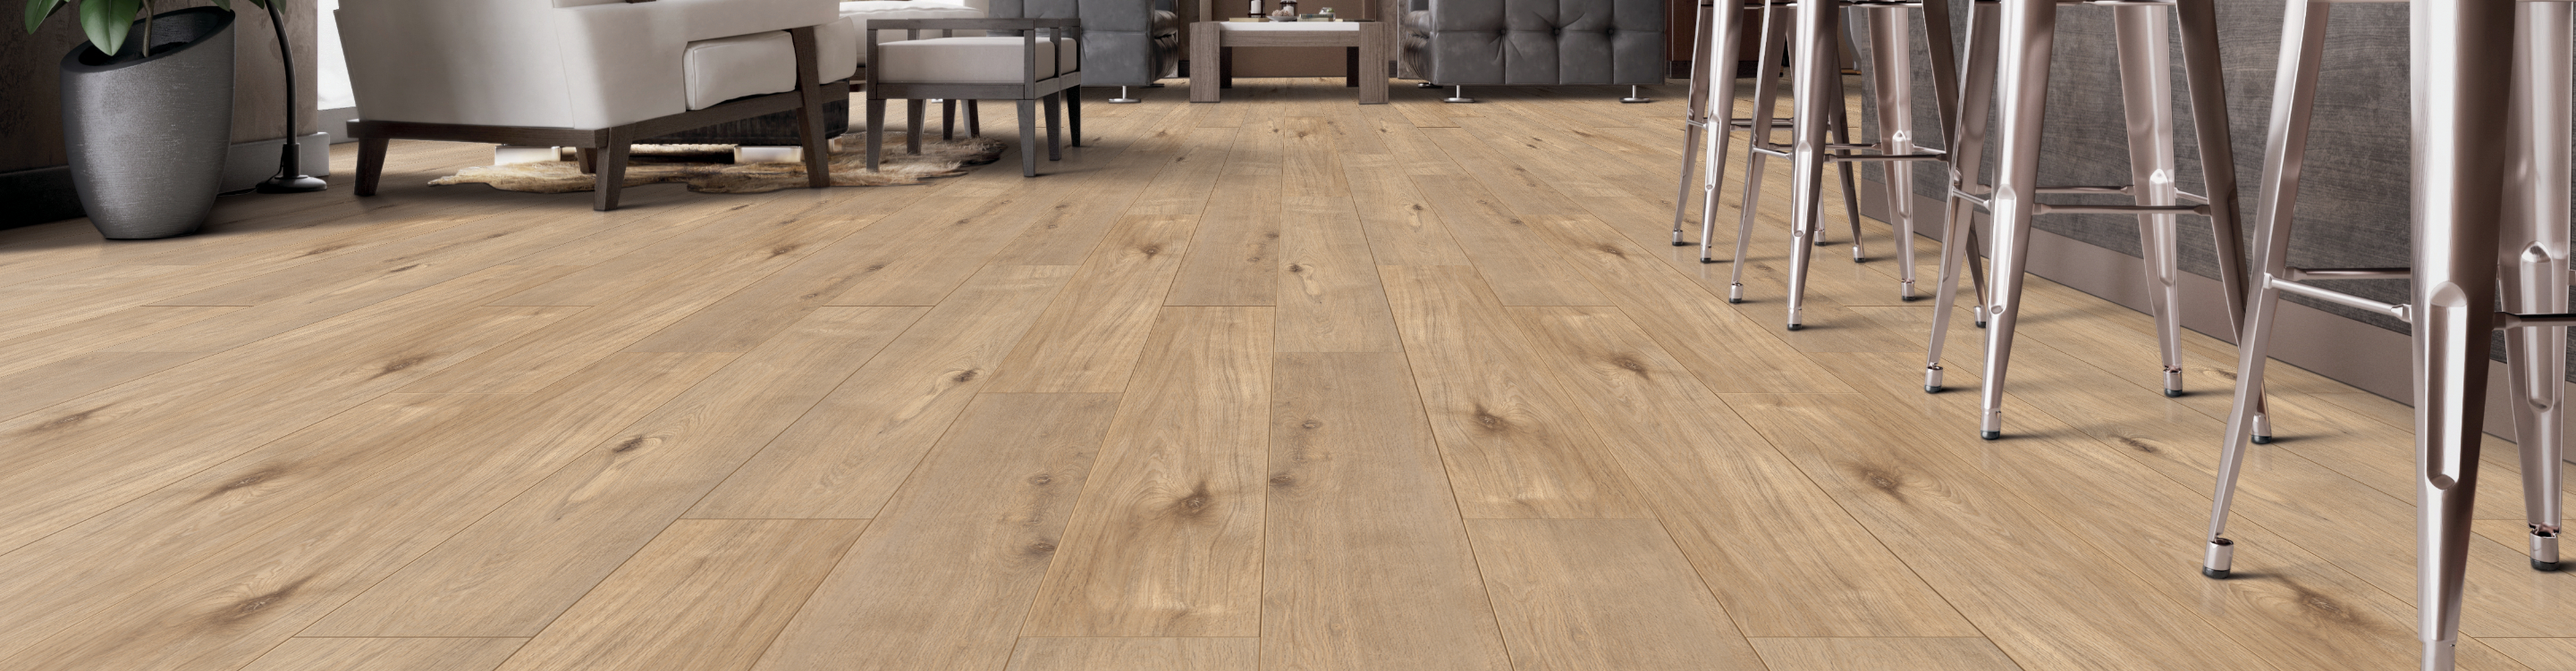 Durable Laminate Flooring in Kitchen